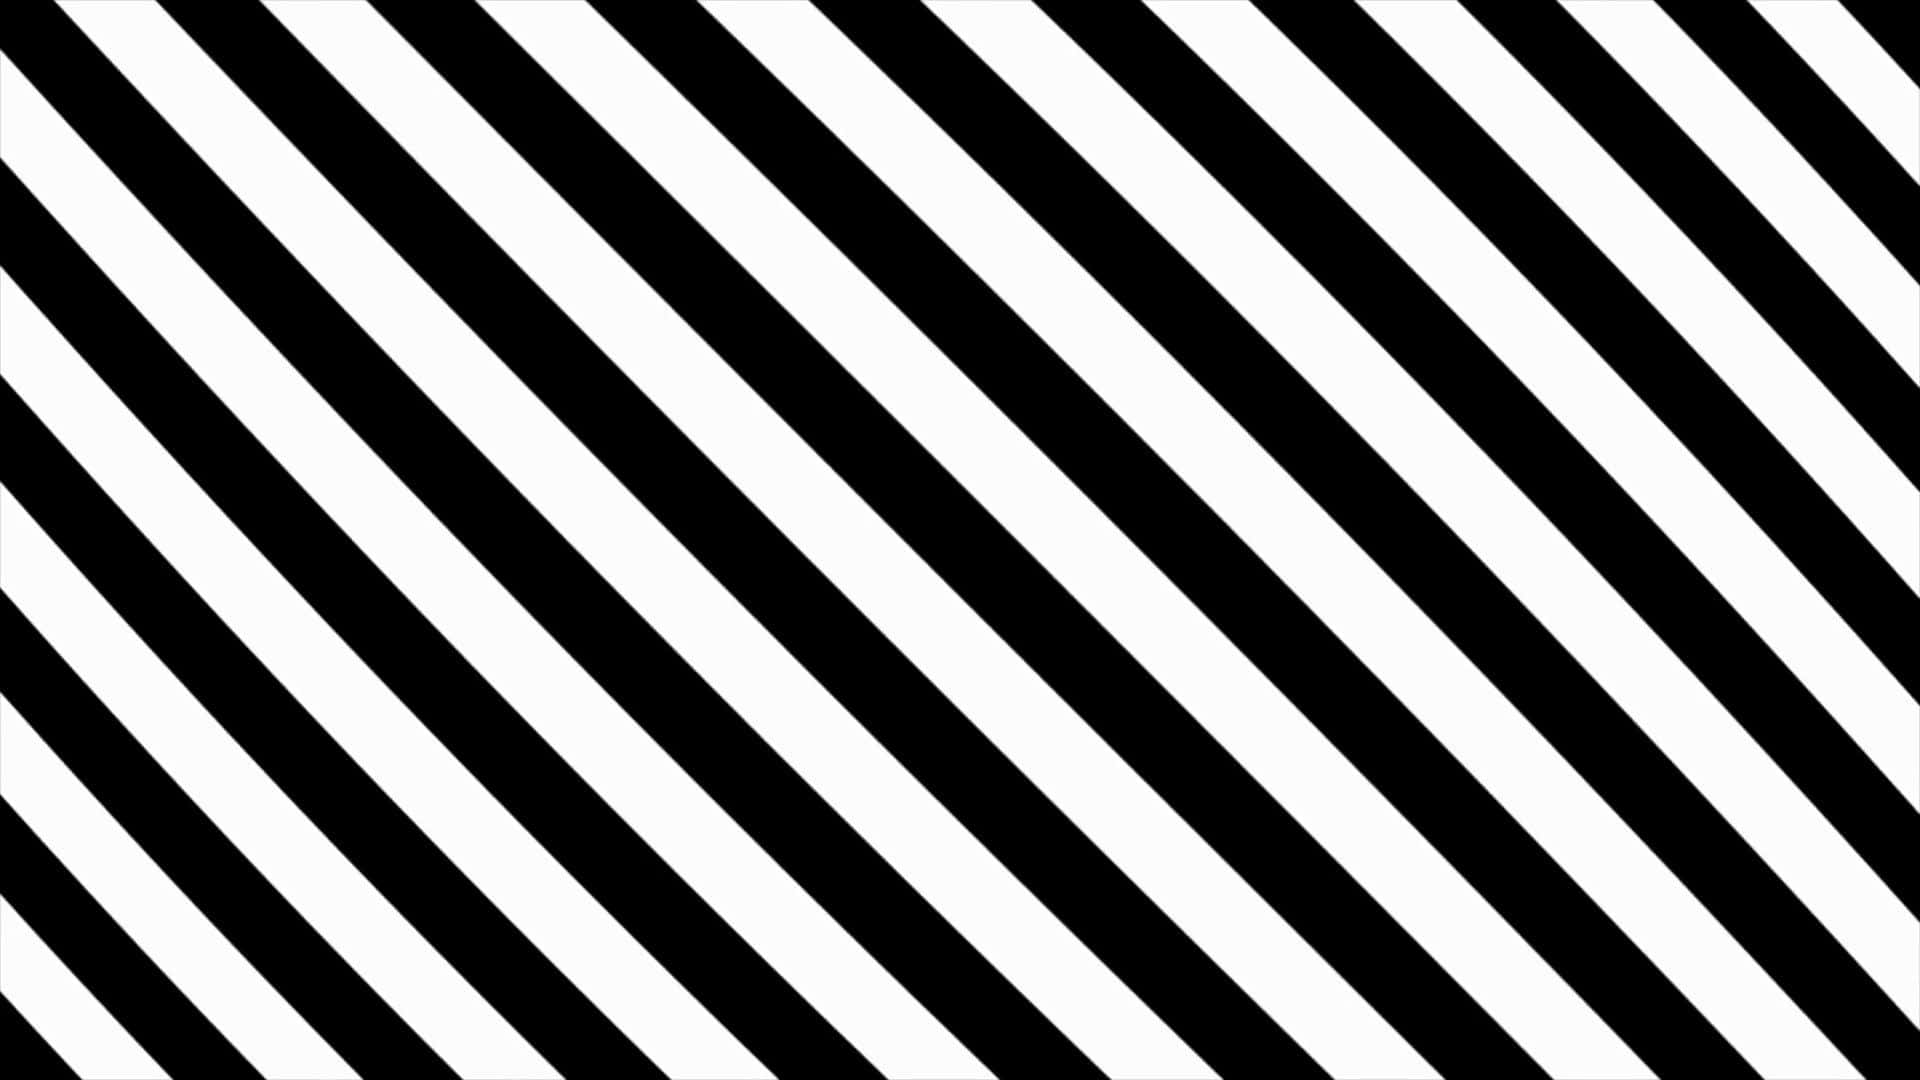 A Black And White Striped Pattern Wallpaper